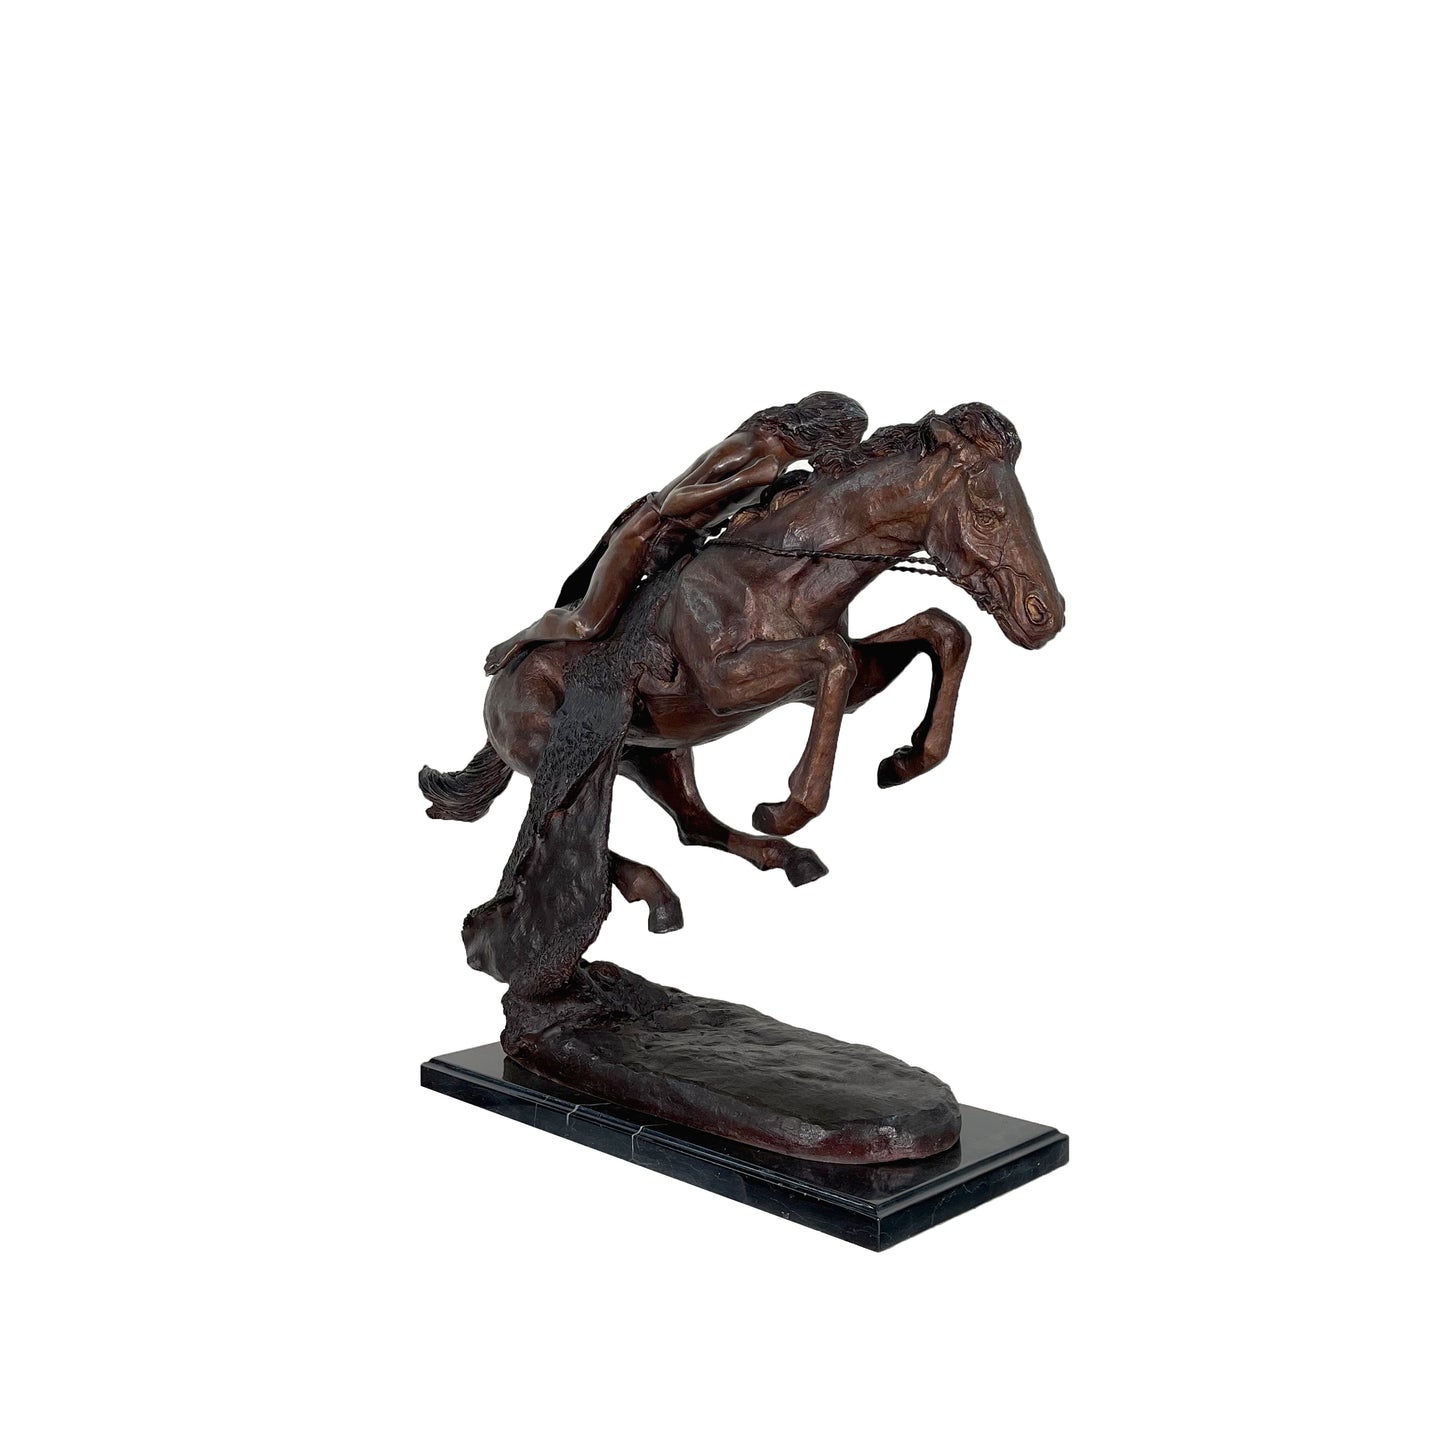 Remington 'Cheyenne' Table-Top Bronze Statue